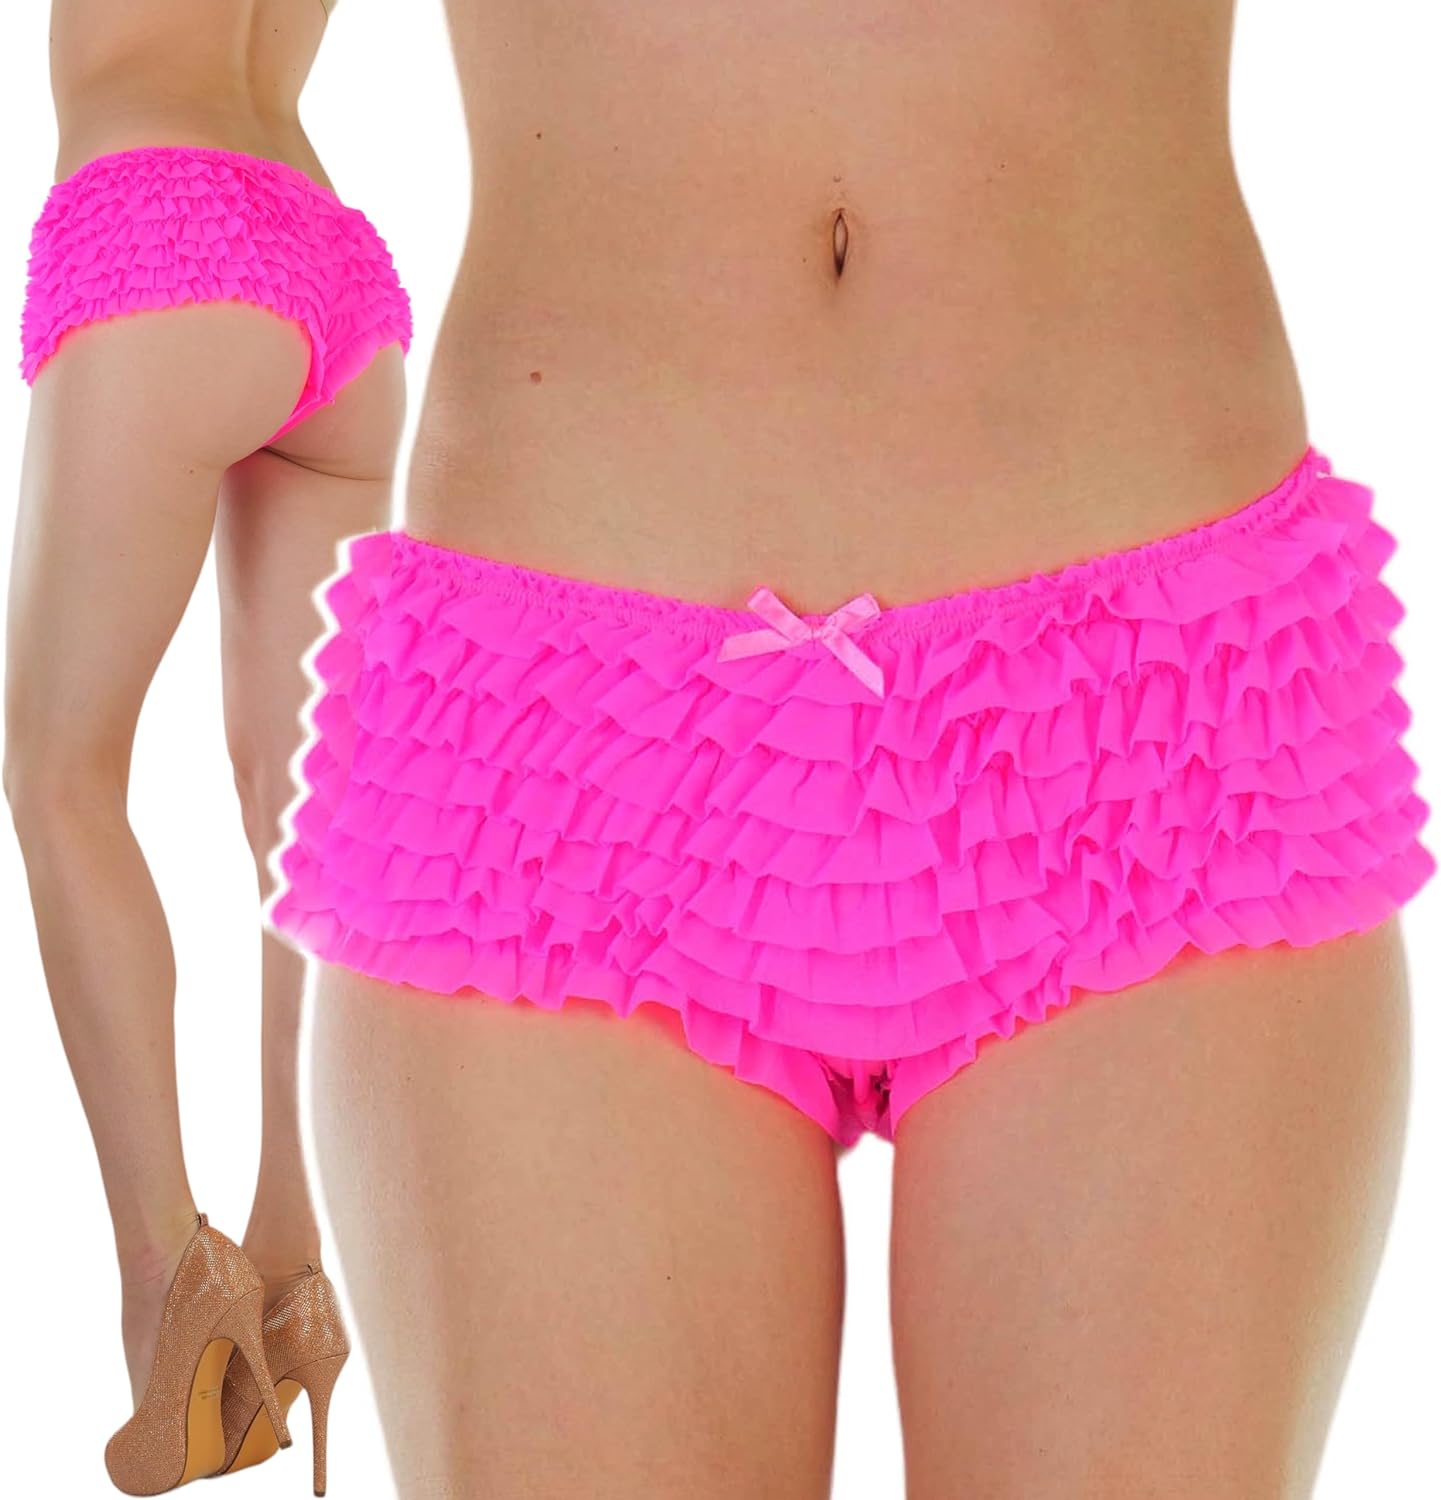 Beauty & Personal Care, Pink ruffle panties WholeSale - Price List, Bulk  Buy at